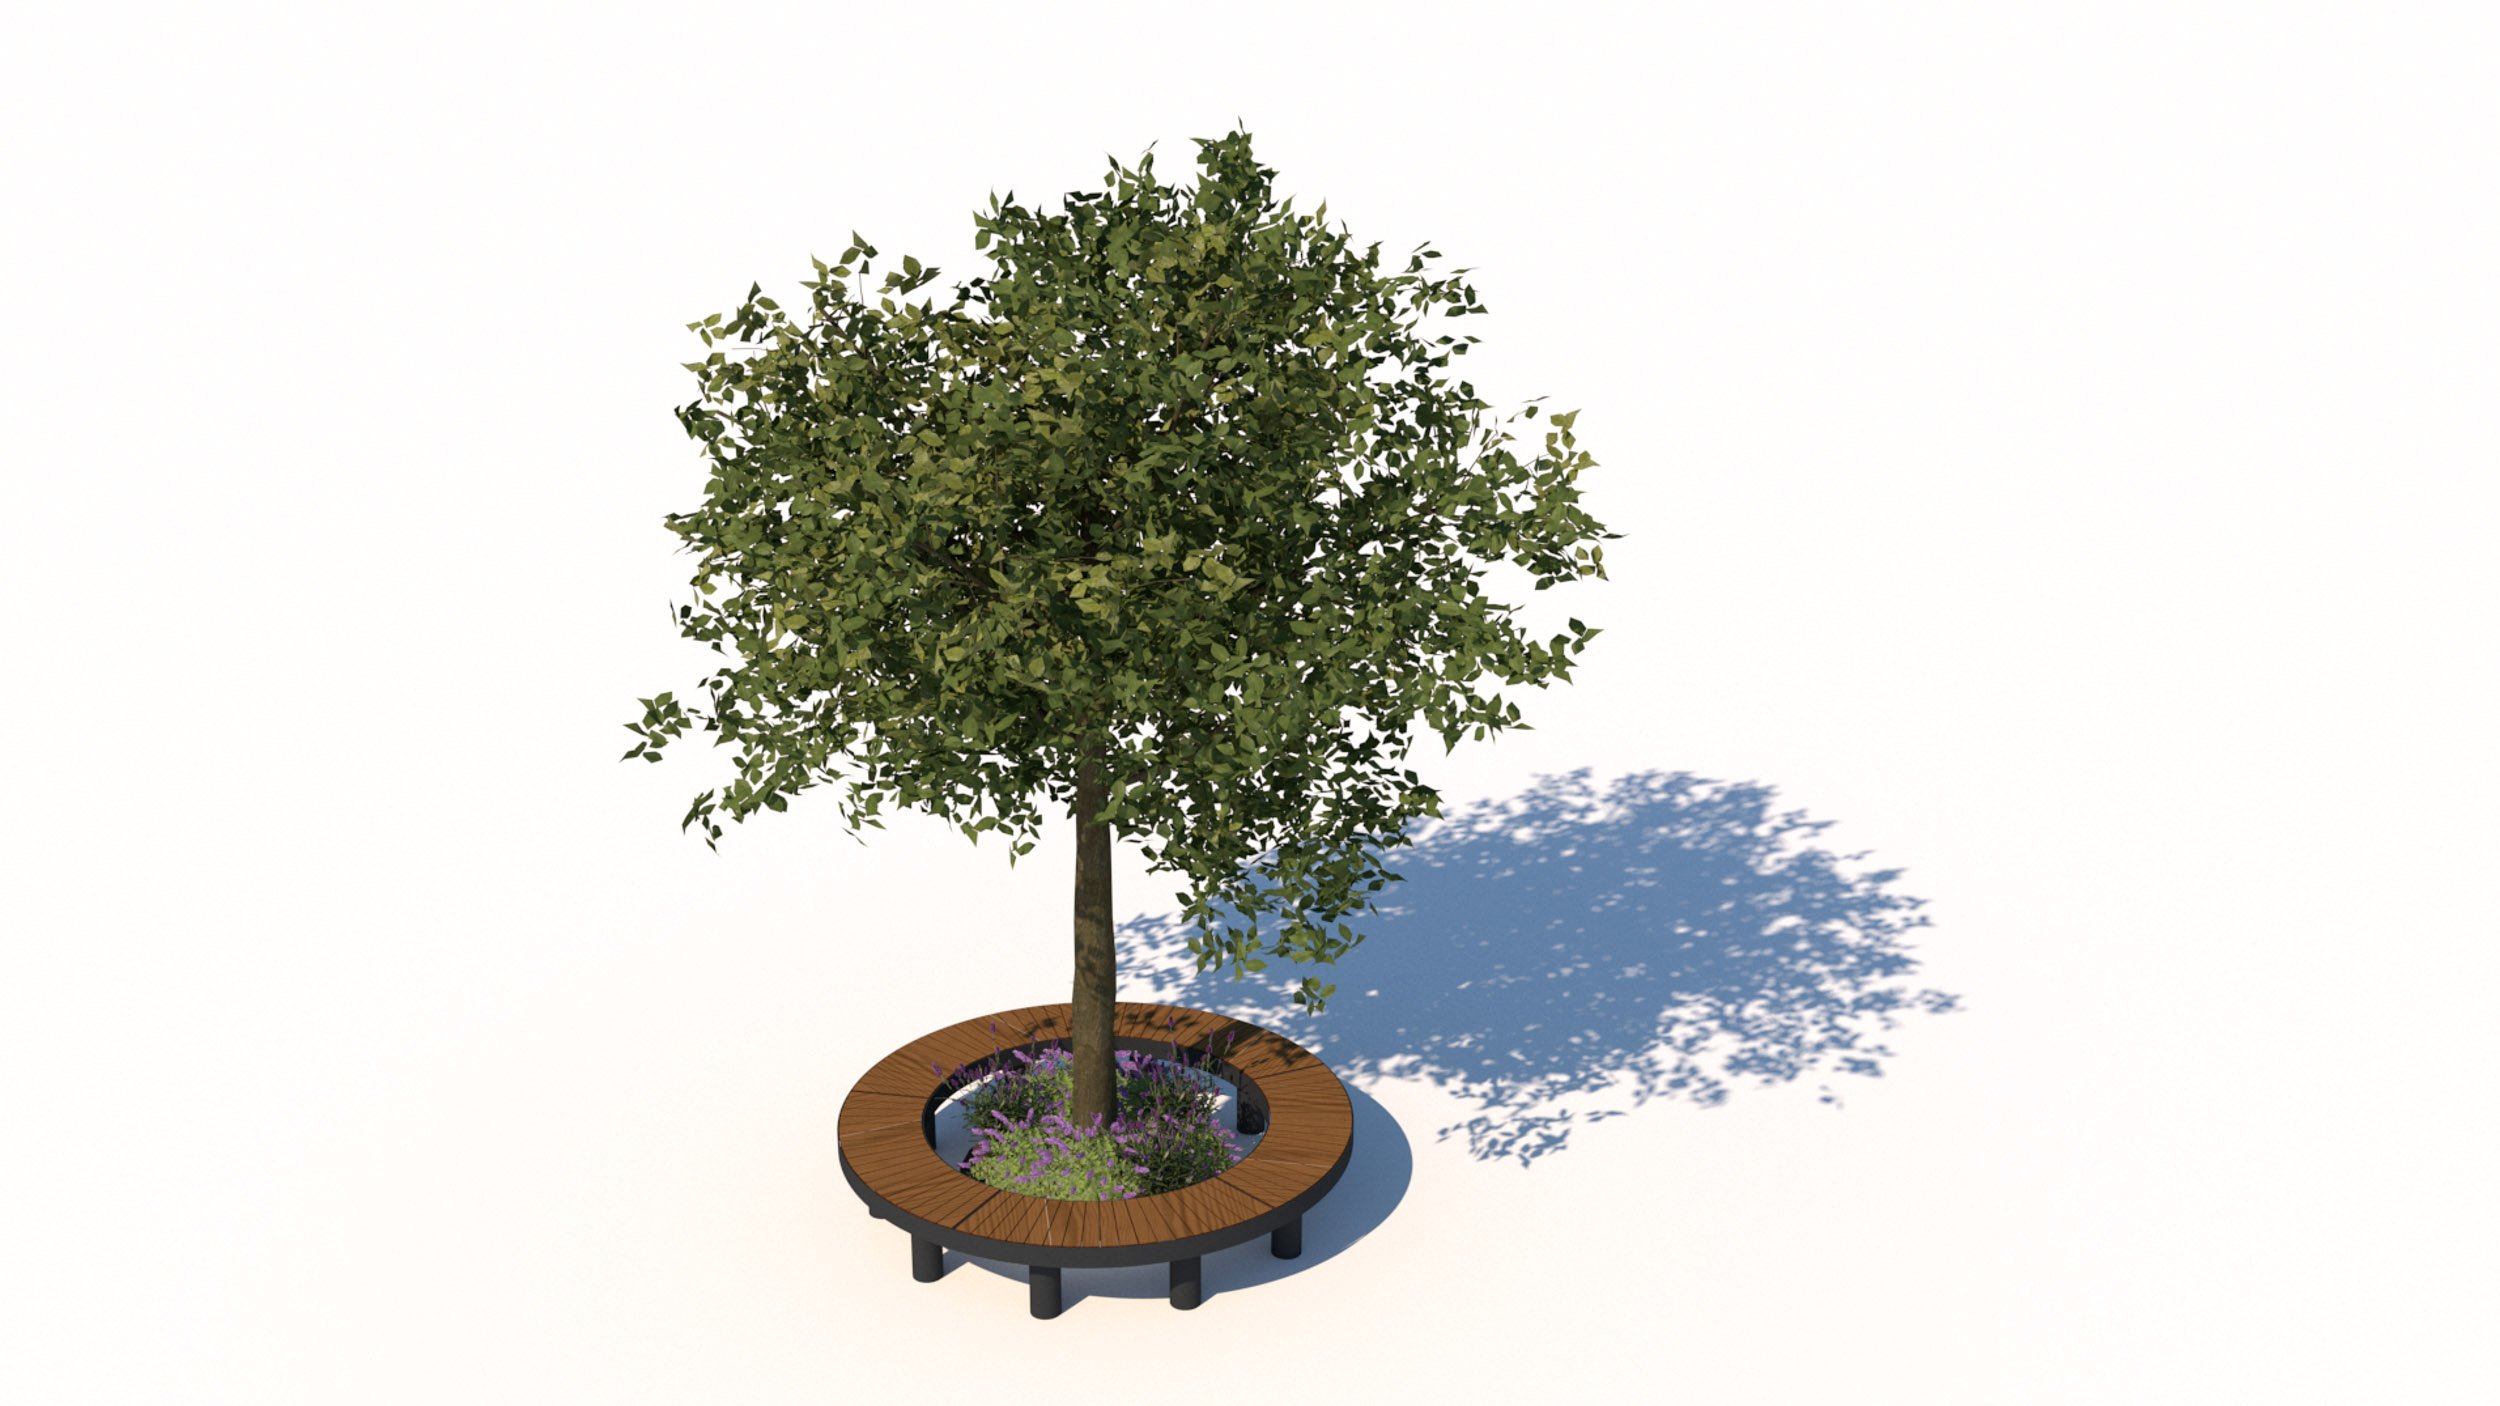 Tree circle wo planter 14 Elements perspektiv.jpg